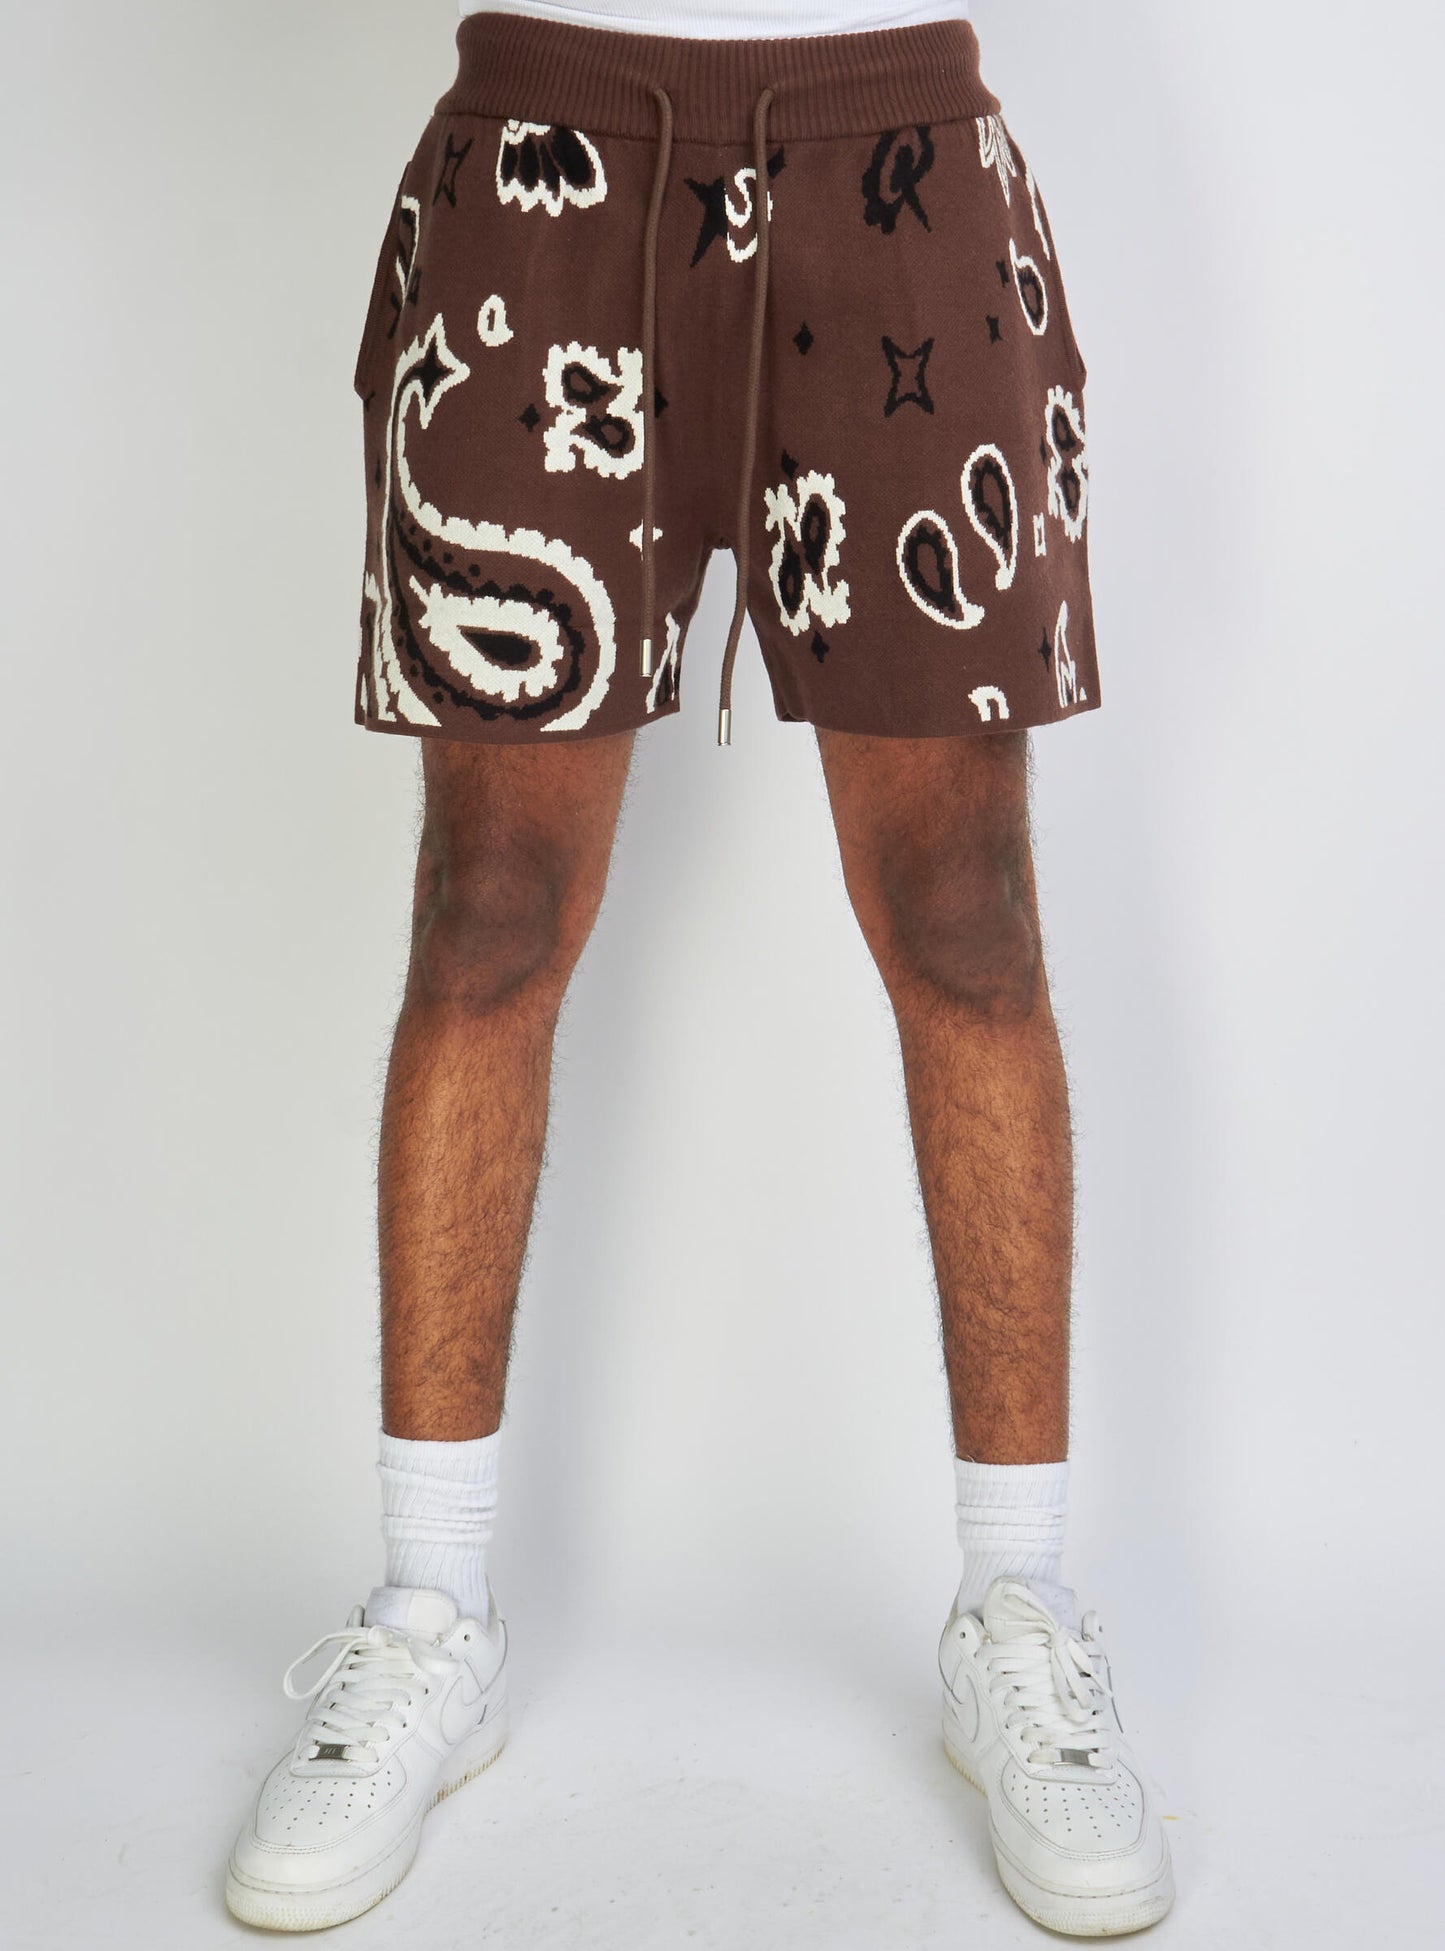 Paisley Print Knit Shorts (Chocolate Brown) /C3